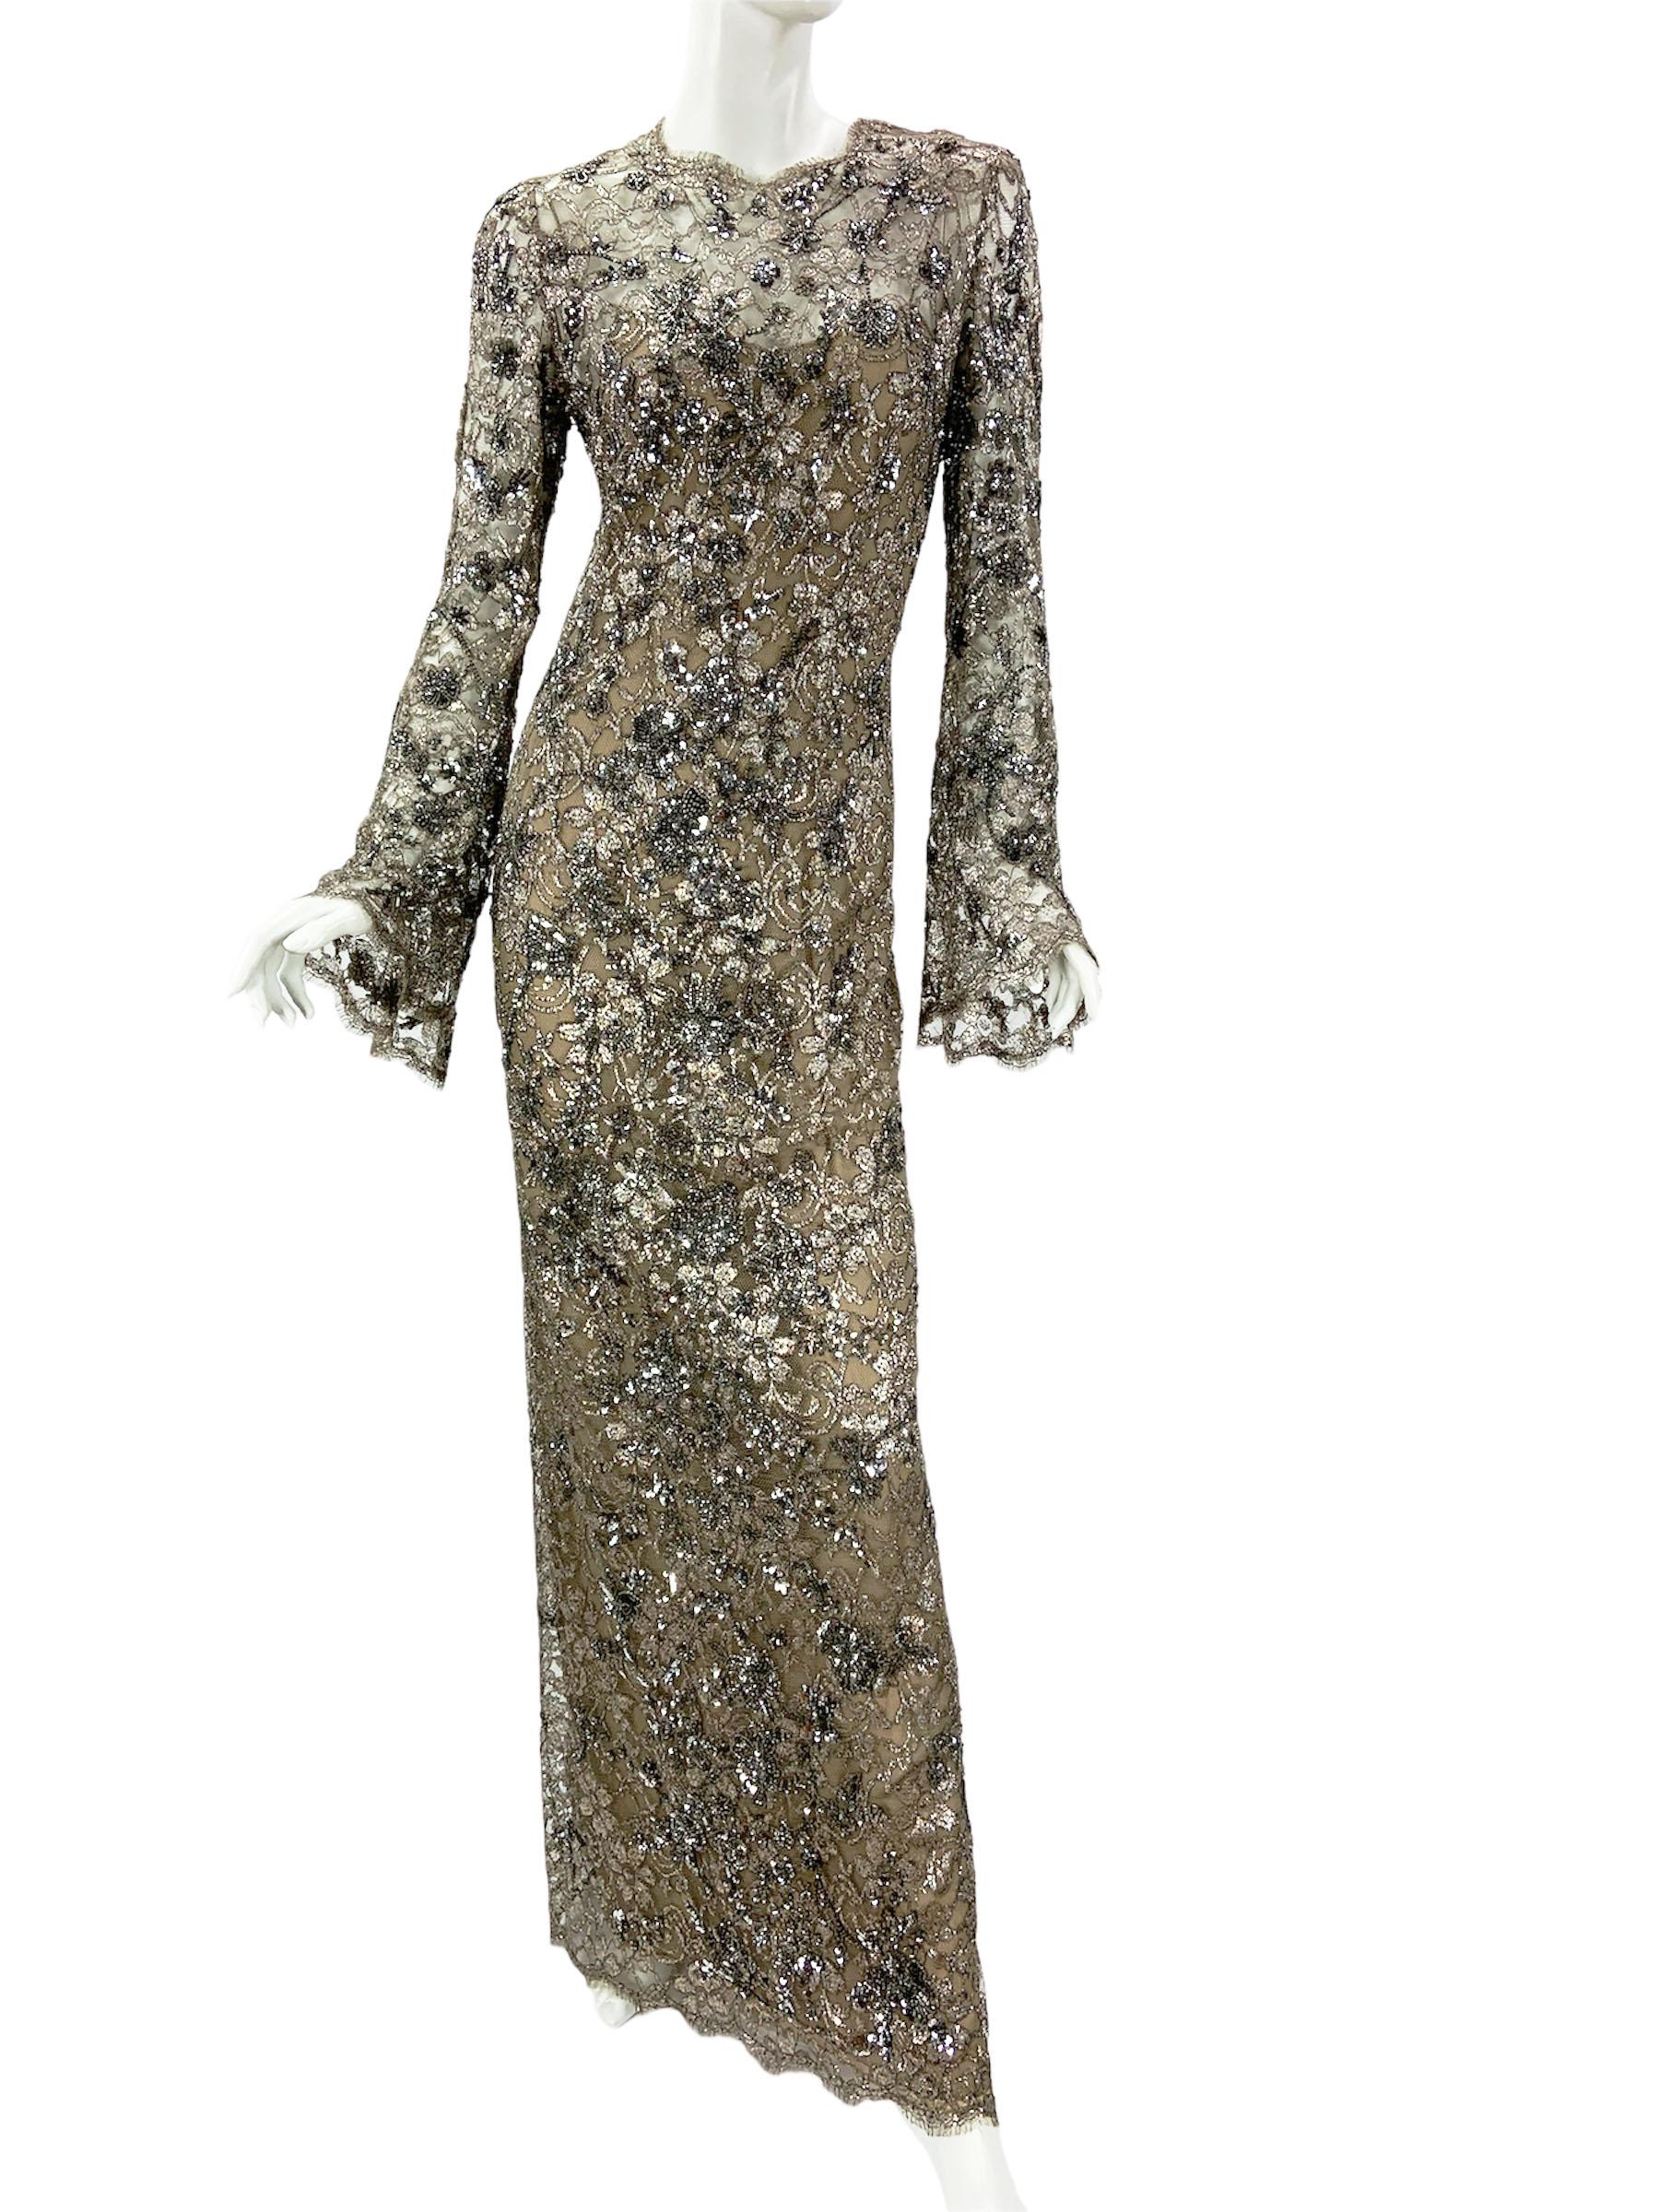 Vintage Oscar de la Renta Fully Embellished Smoky Gray Lace Dress Gown  2